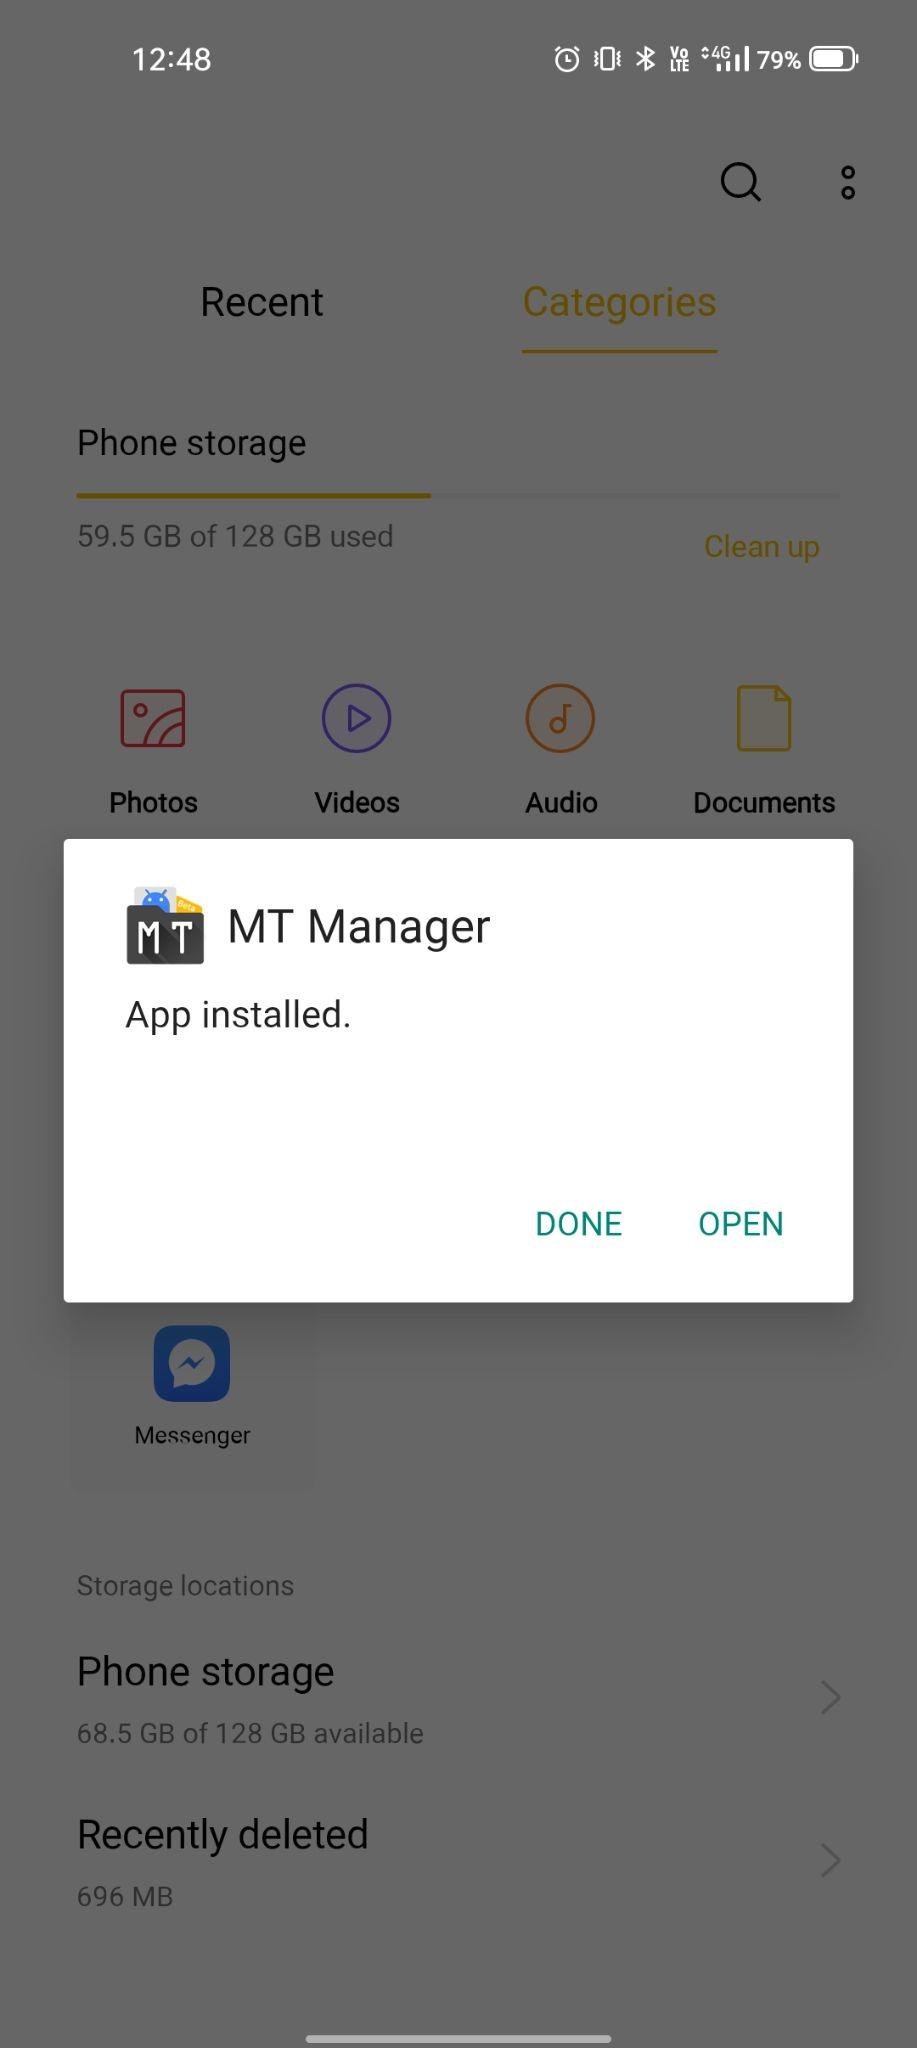 mt manager apk installed